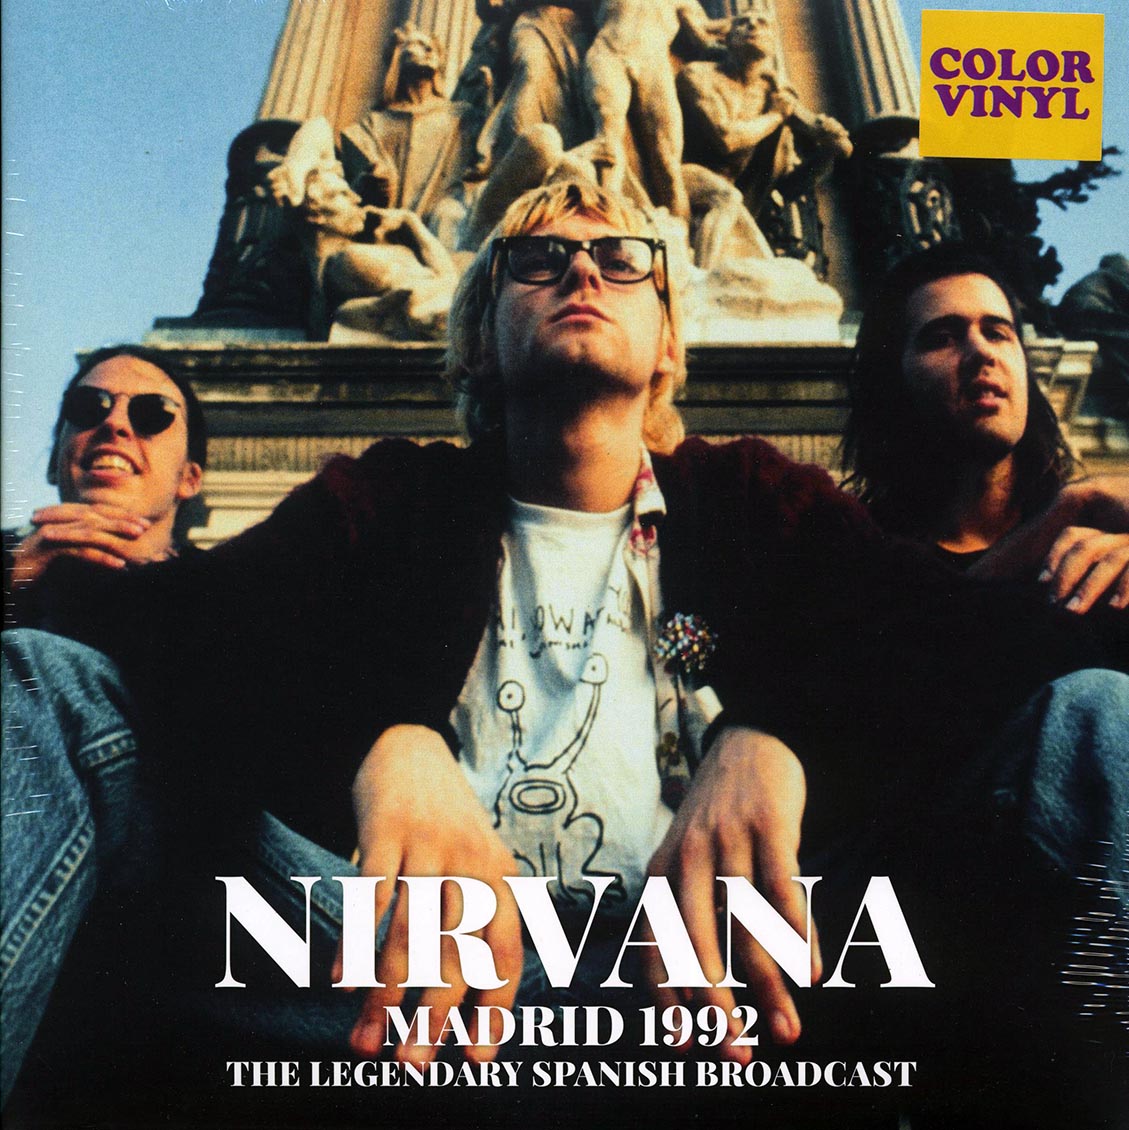 Nirvana - Madrid 1992: The Legendary Spanish Broadcast (ltd. ed.) (2xLP) (red vinyl) - Vinyl LP